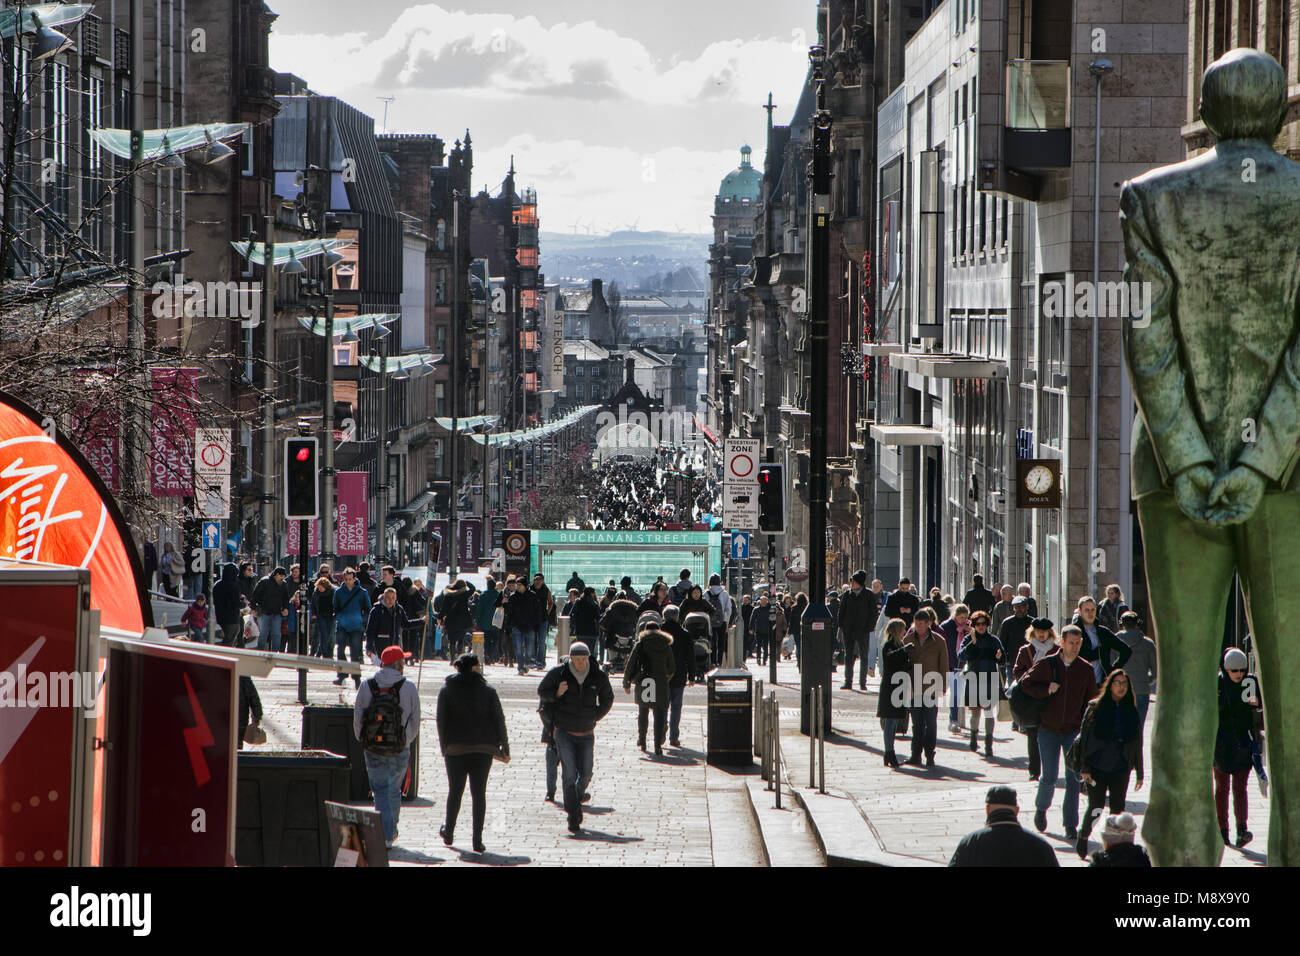 Looking down Buchanan Street, Glasgow, Scotland, with statue of Donald Dewar in foreground Stock Photo